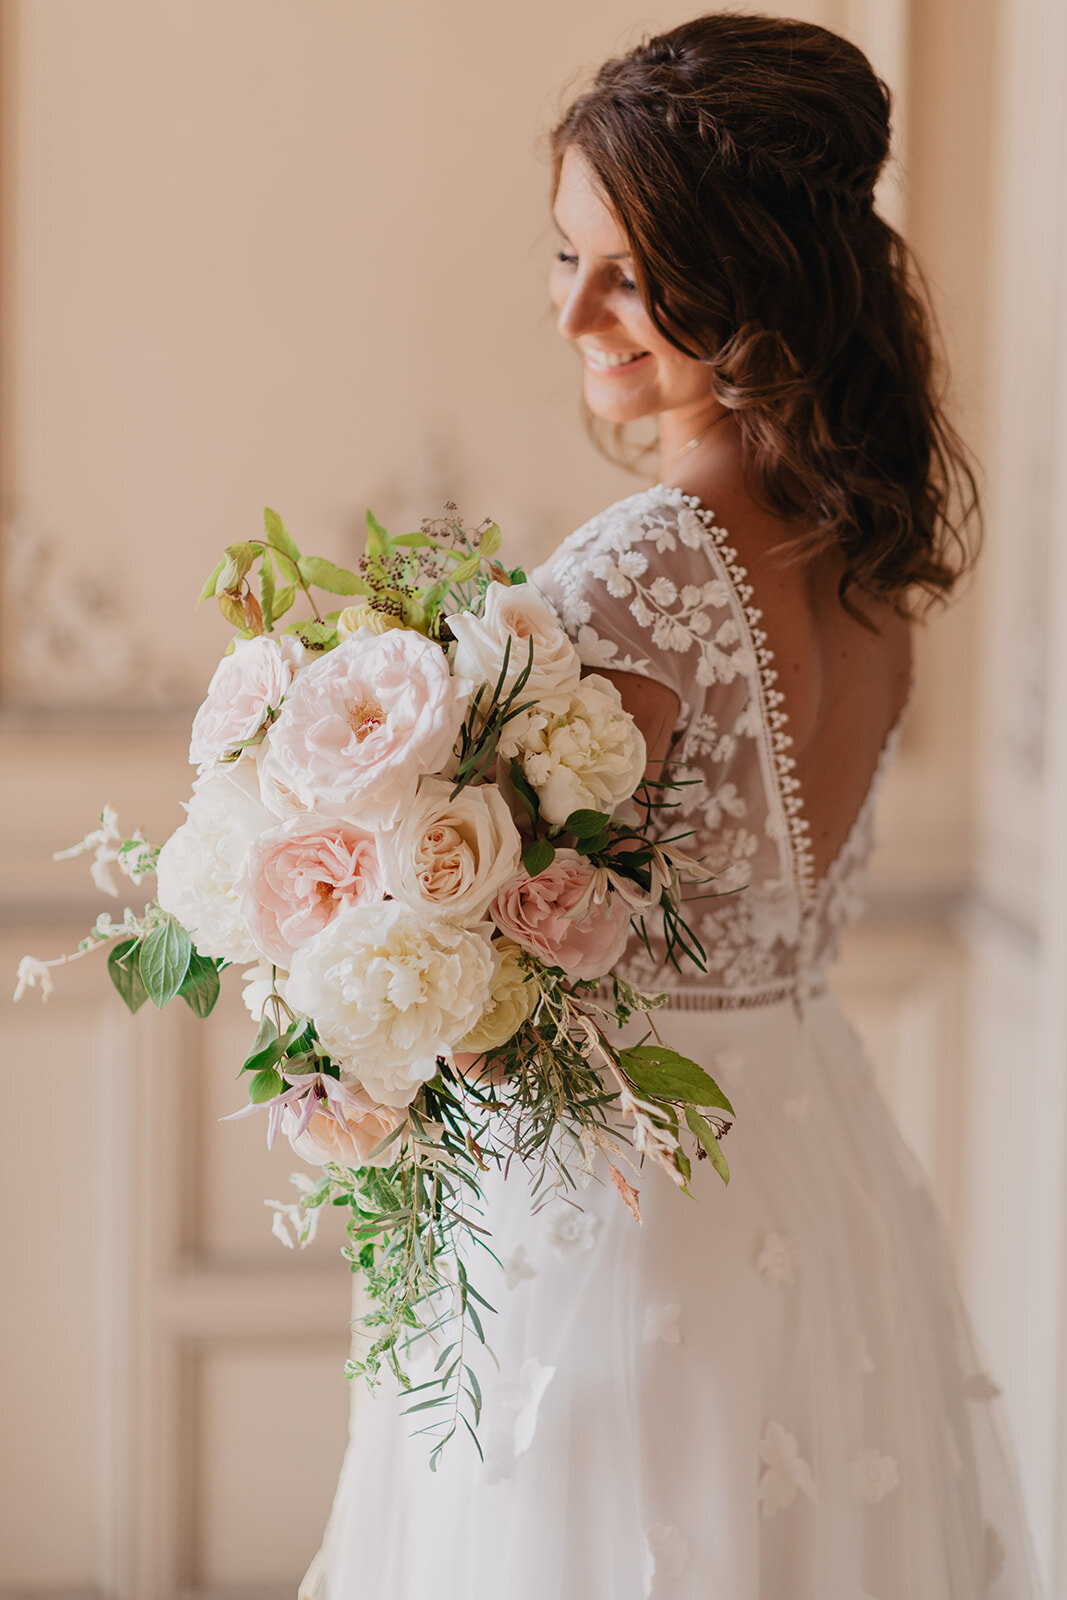 MorganeBallPhotography-Wedding-StyledShoot-LovelyInstants-ChateauConslagrandville-SousUnAirDePrintemps-part04-bride-01-inside-50- 0837_websize